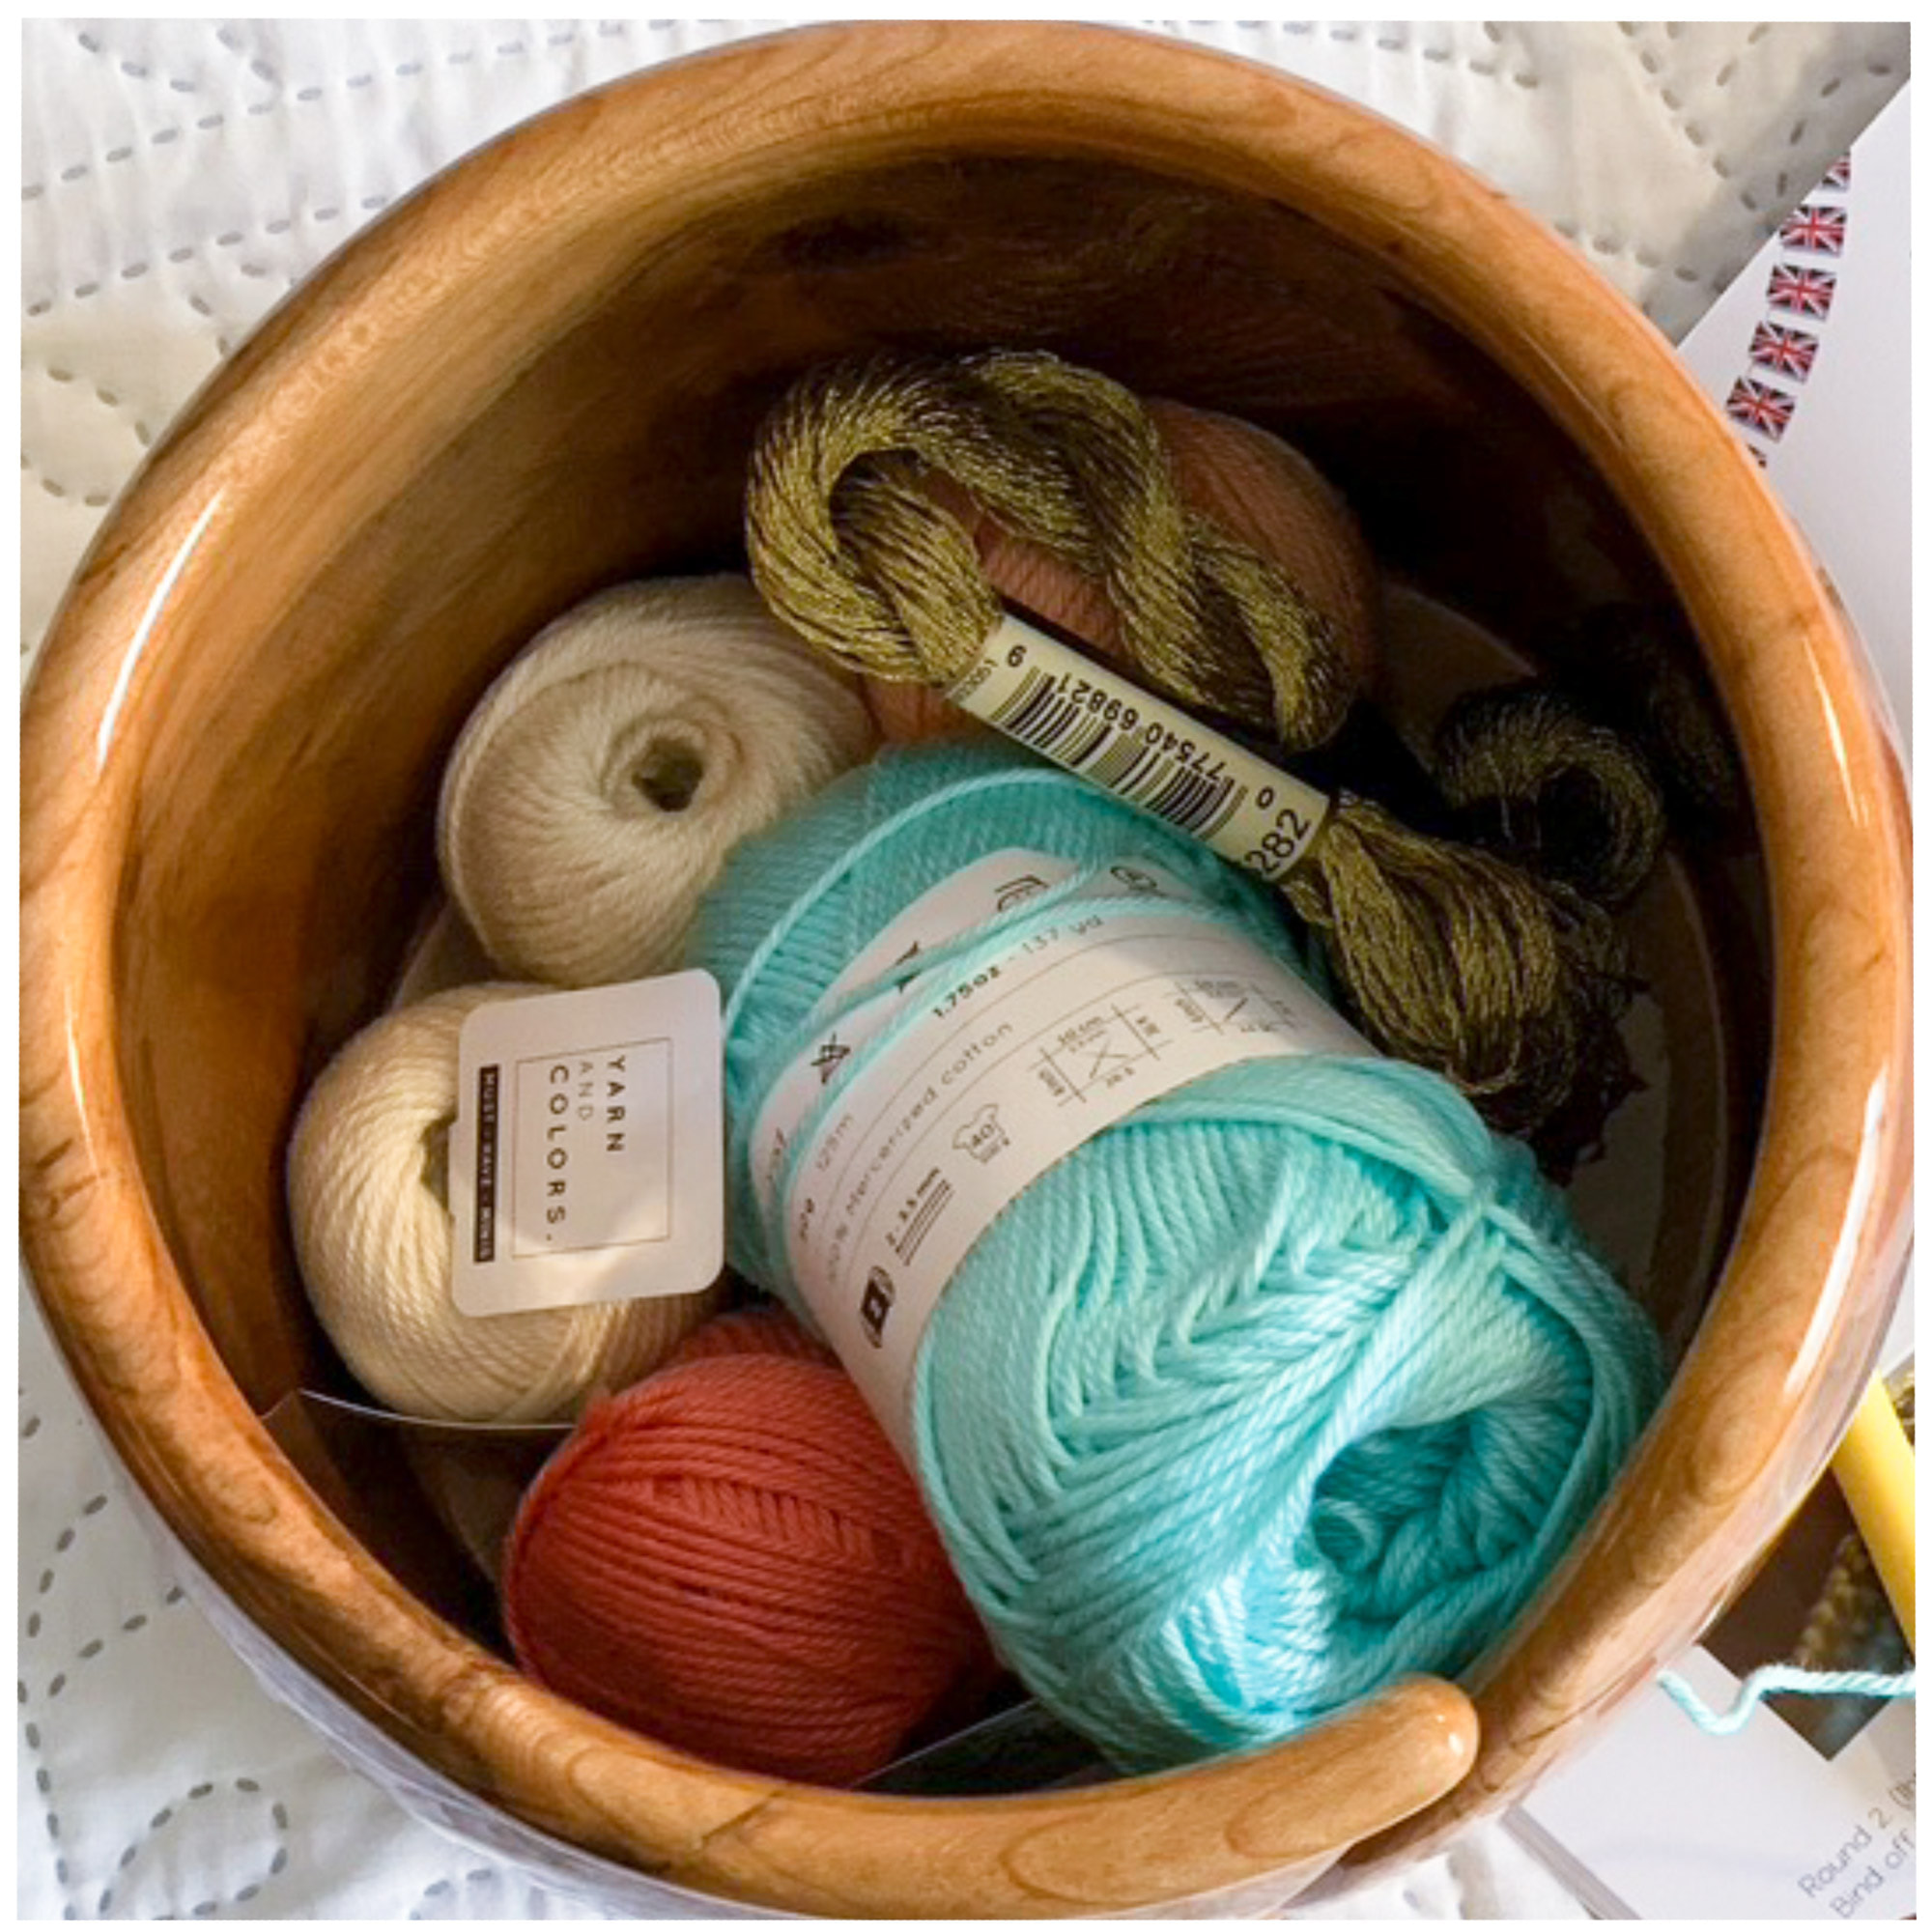 XL Cherry Yarn Bowl with Deep Blue Sparkle Inlay For Knitting, Crochet,  Yarning #1117